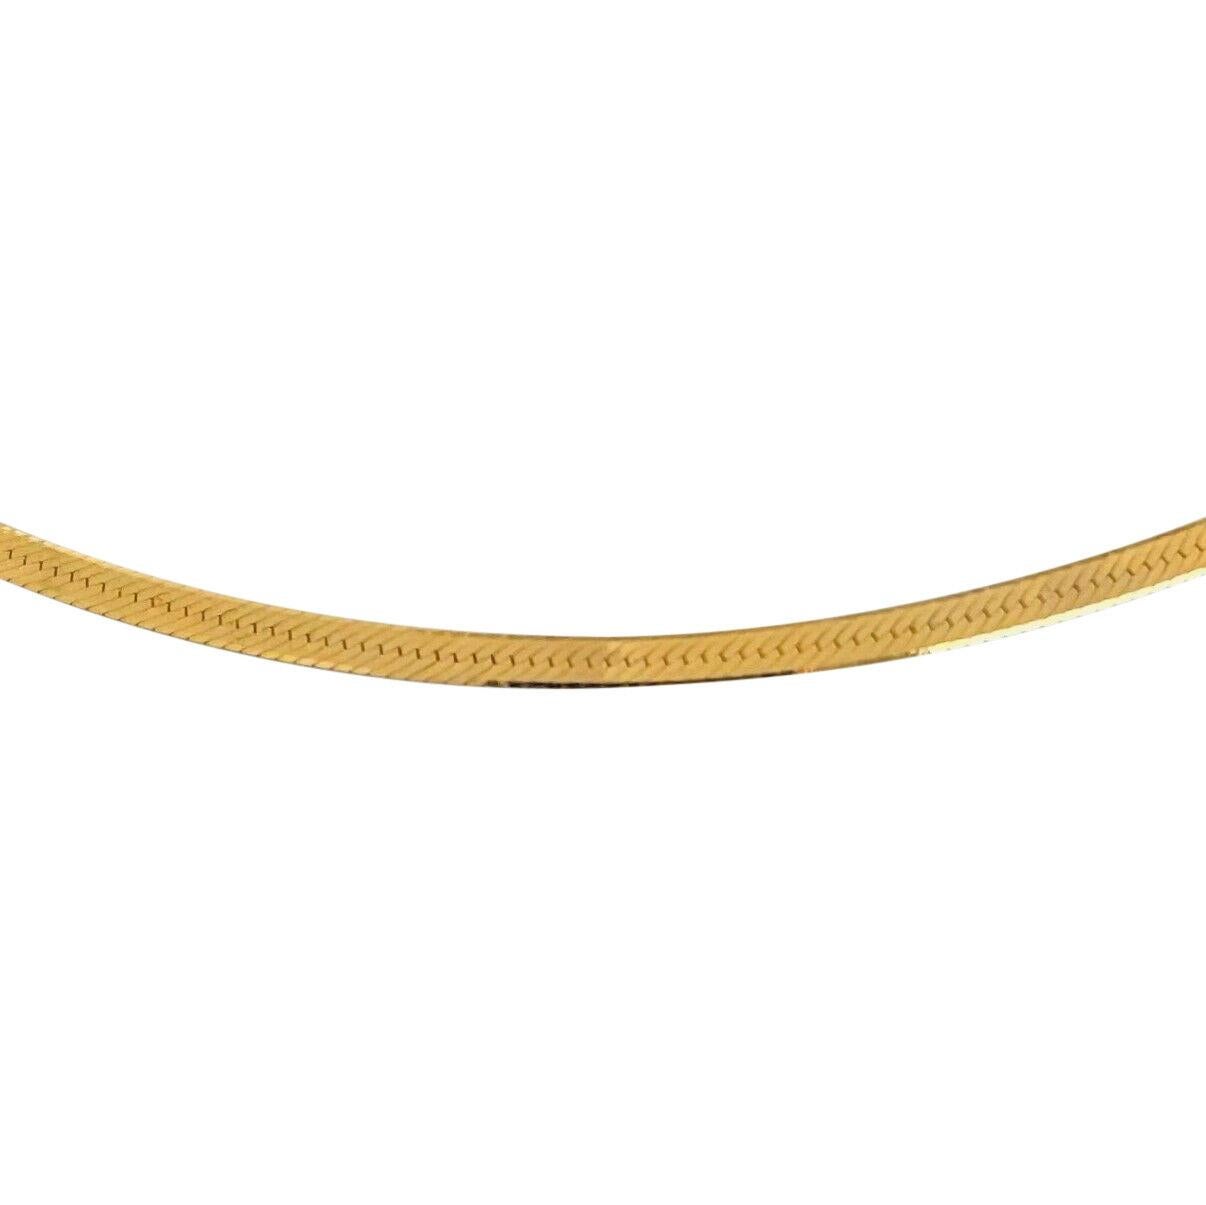 thin flat gold chain